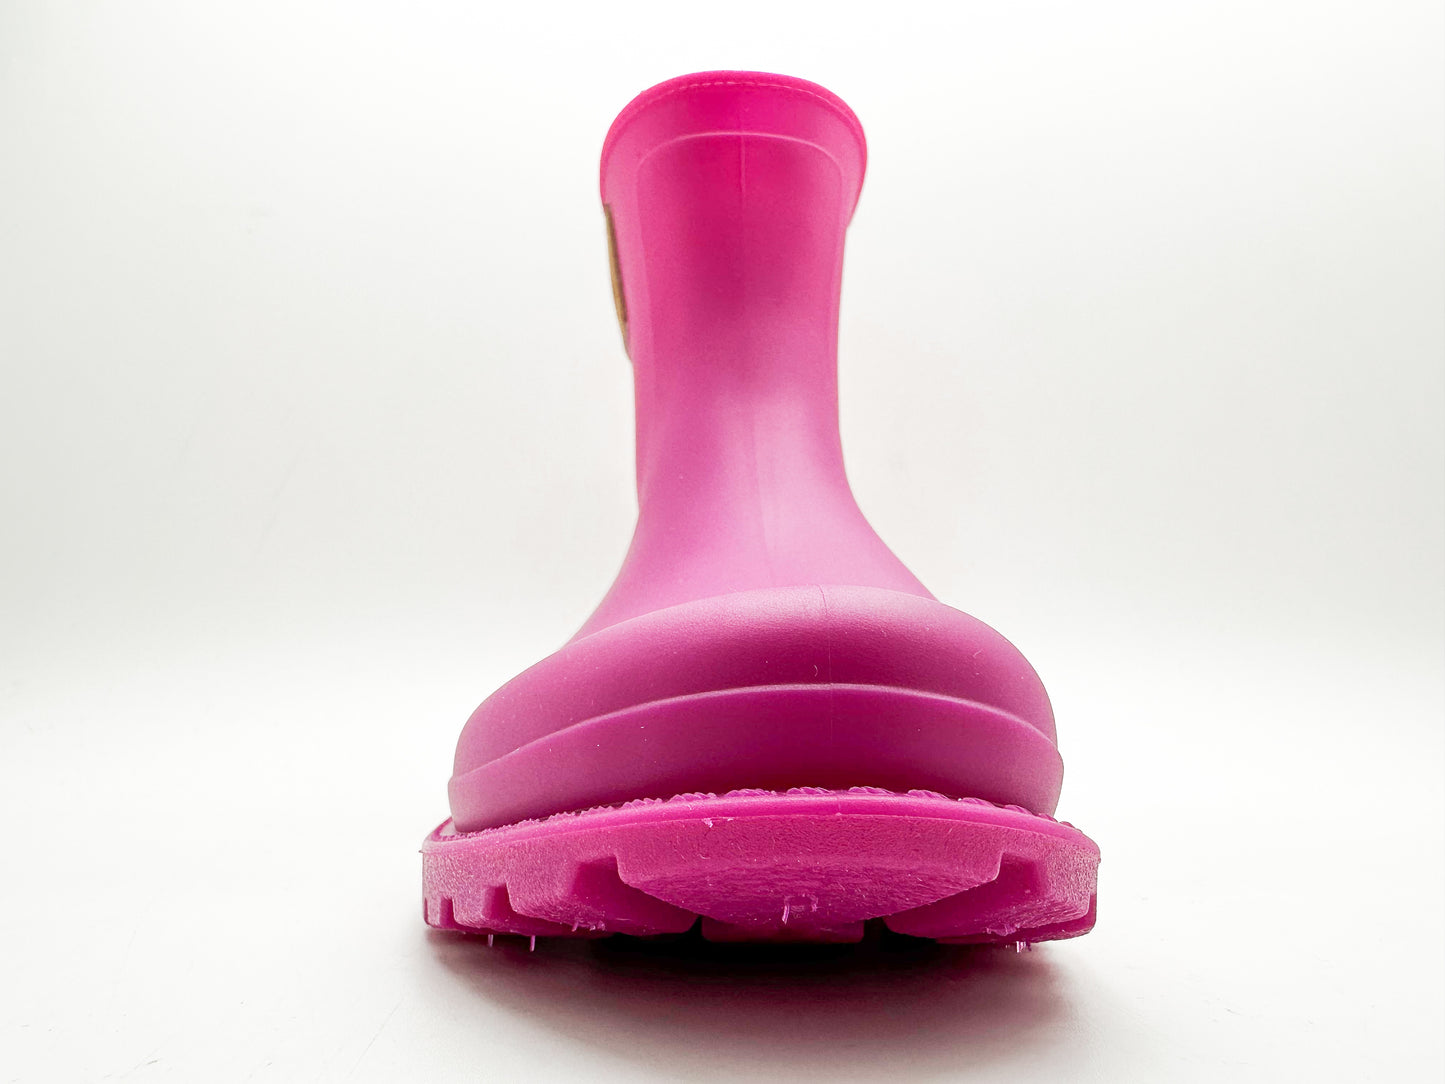 thies ® Bio Rainboot orchid pink vegan (W) | 100% waterproof biodegradable rainboots